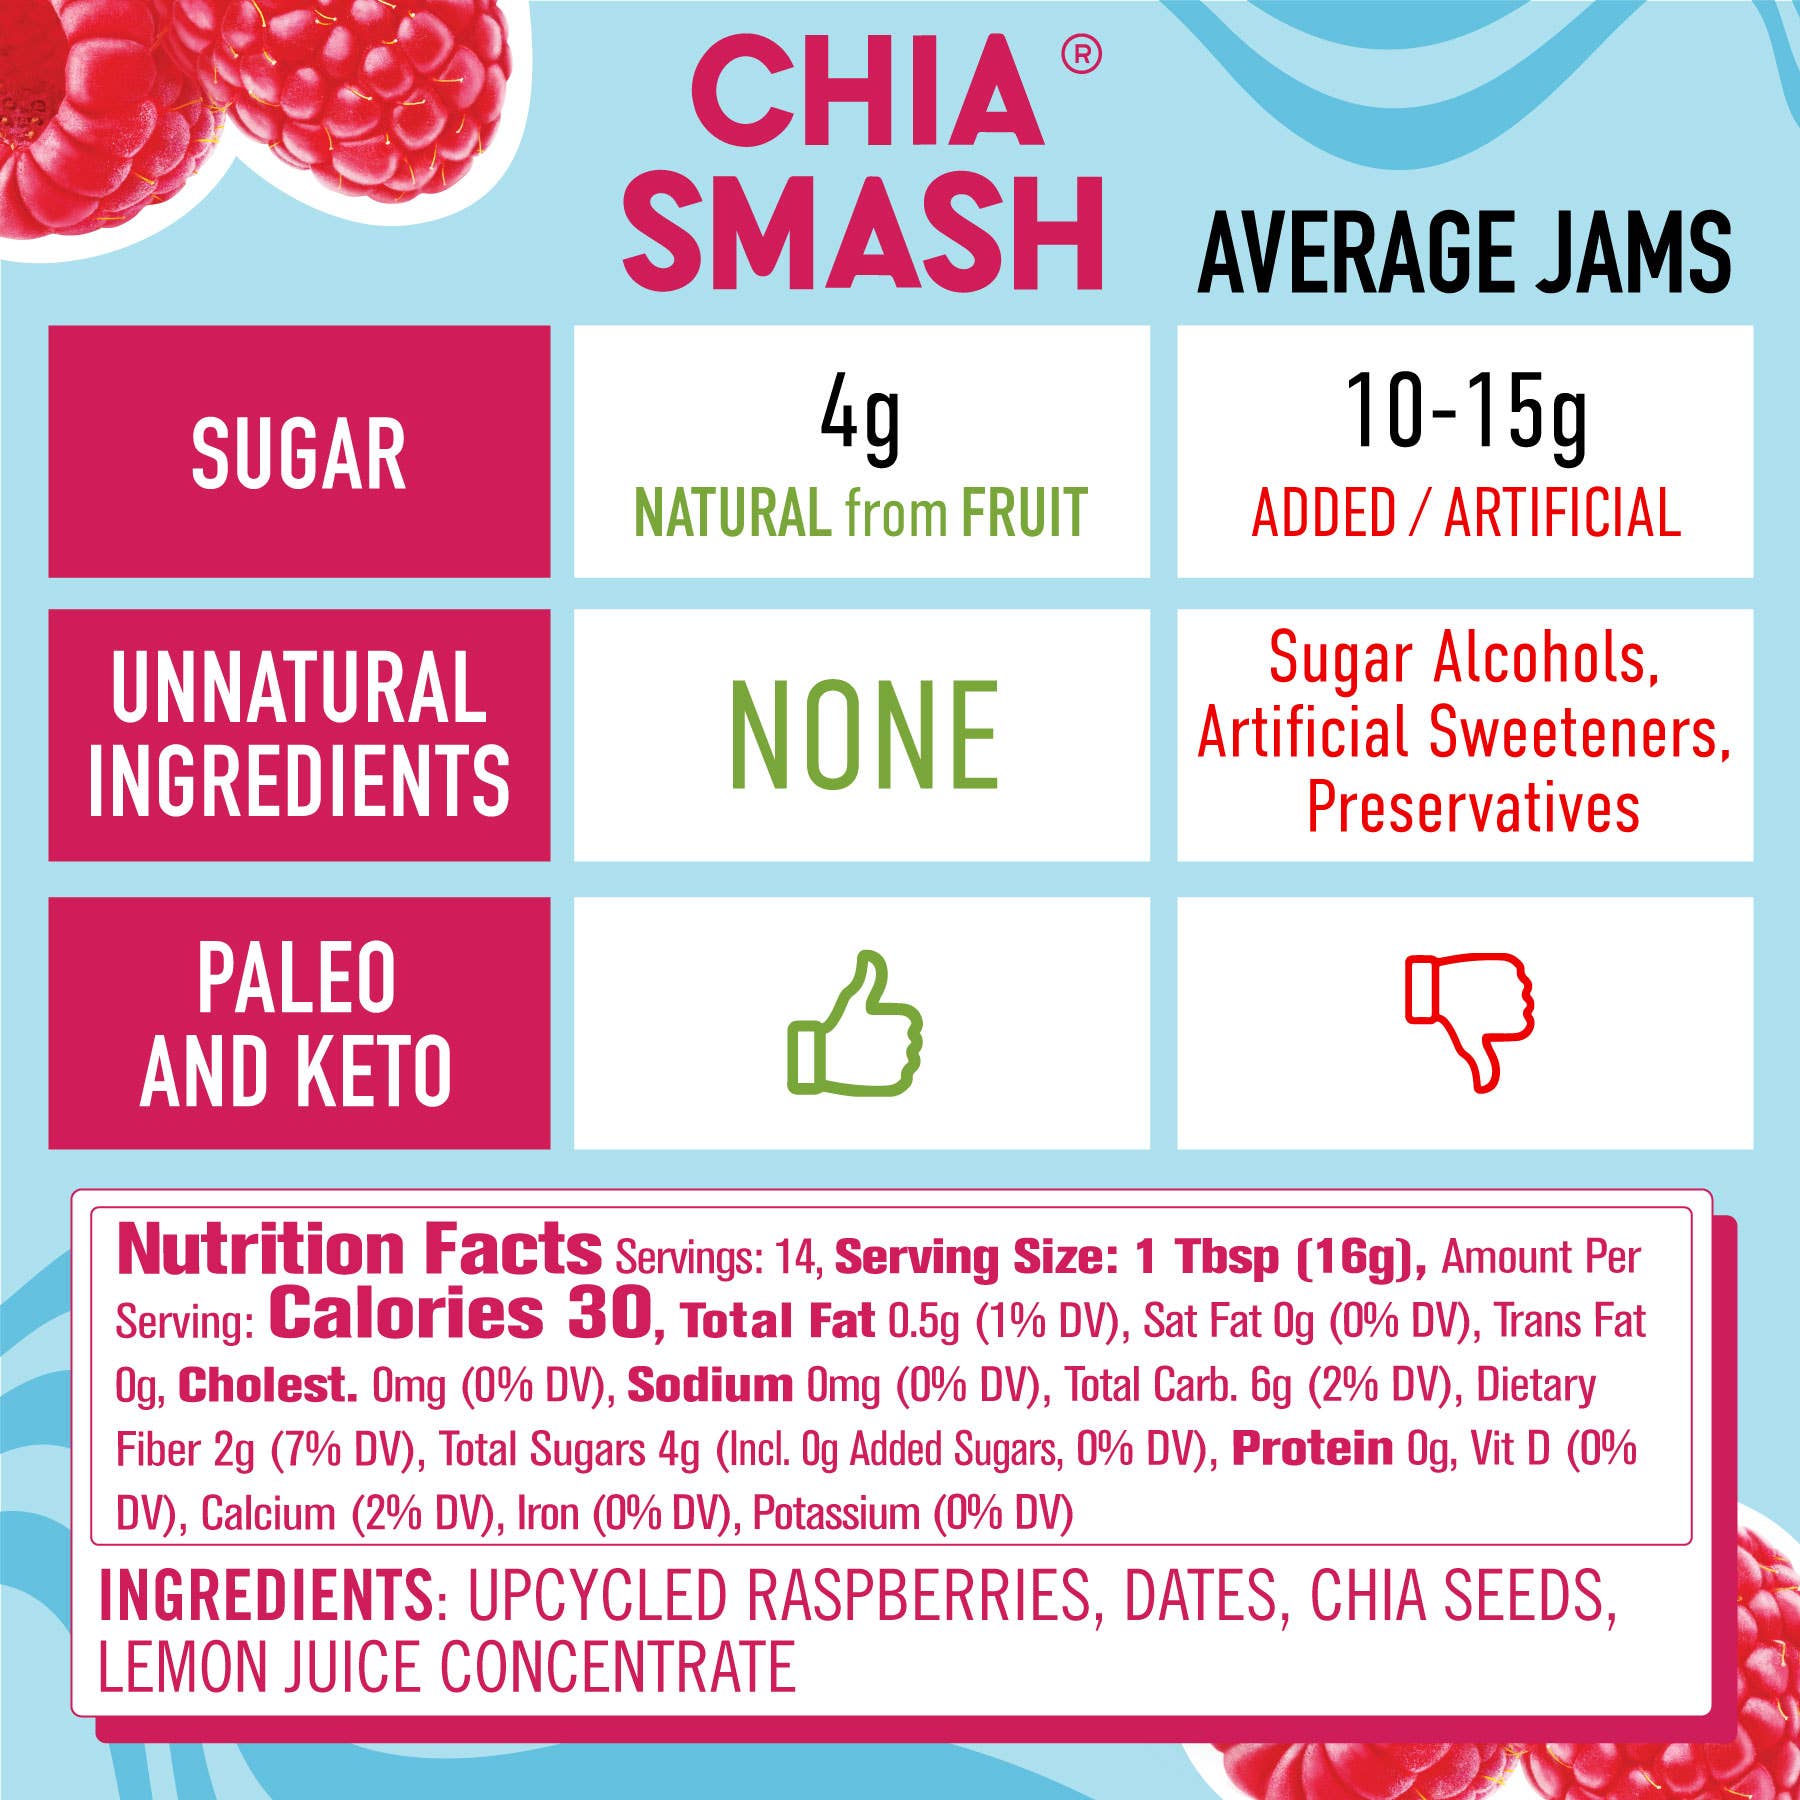 Raspberry Chia Smash - Superfood Jam - 8 OZ